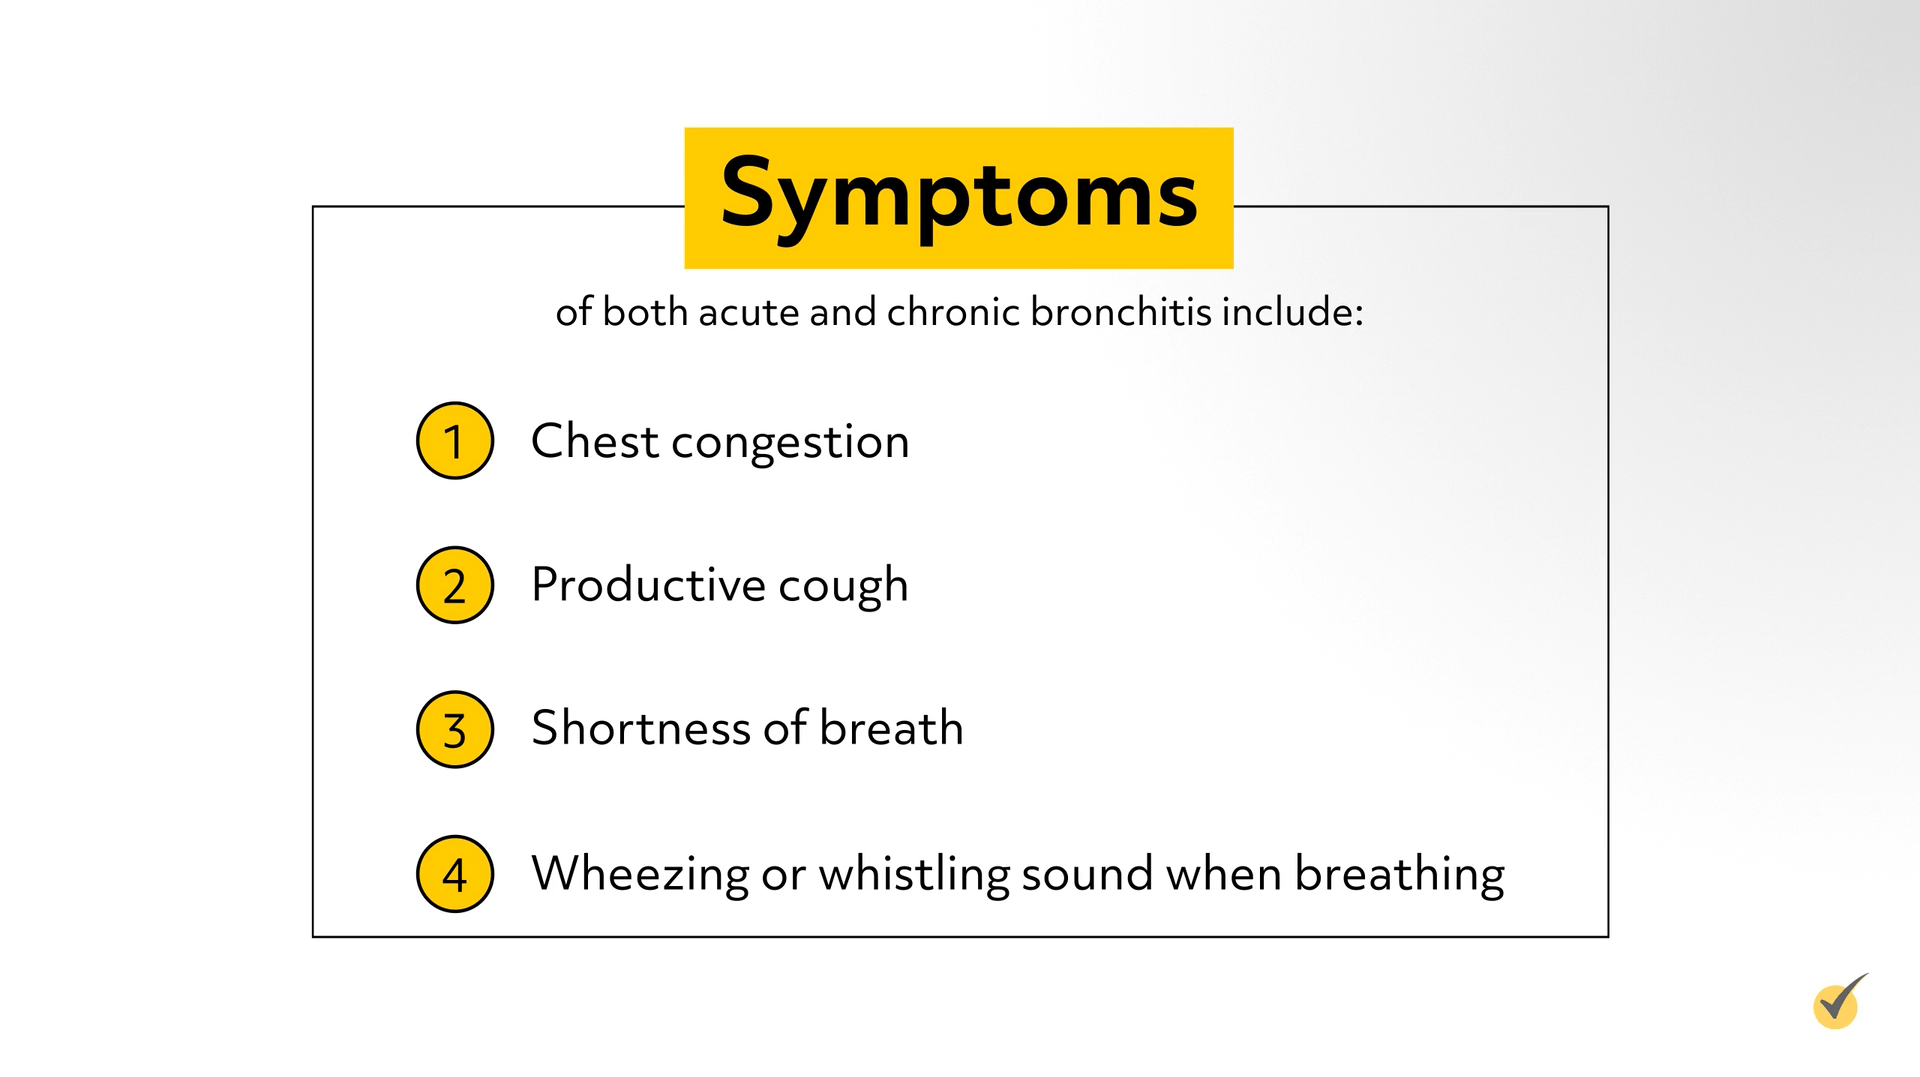 Symptoms of both chronic and acute bronchitis.